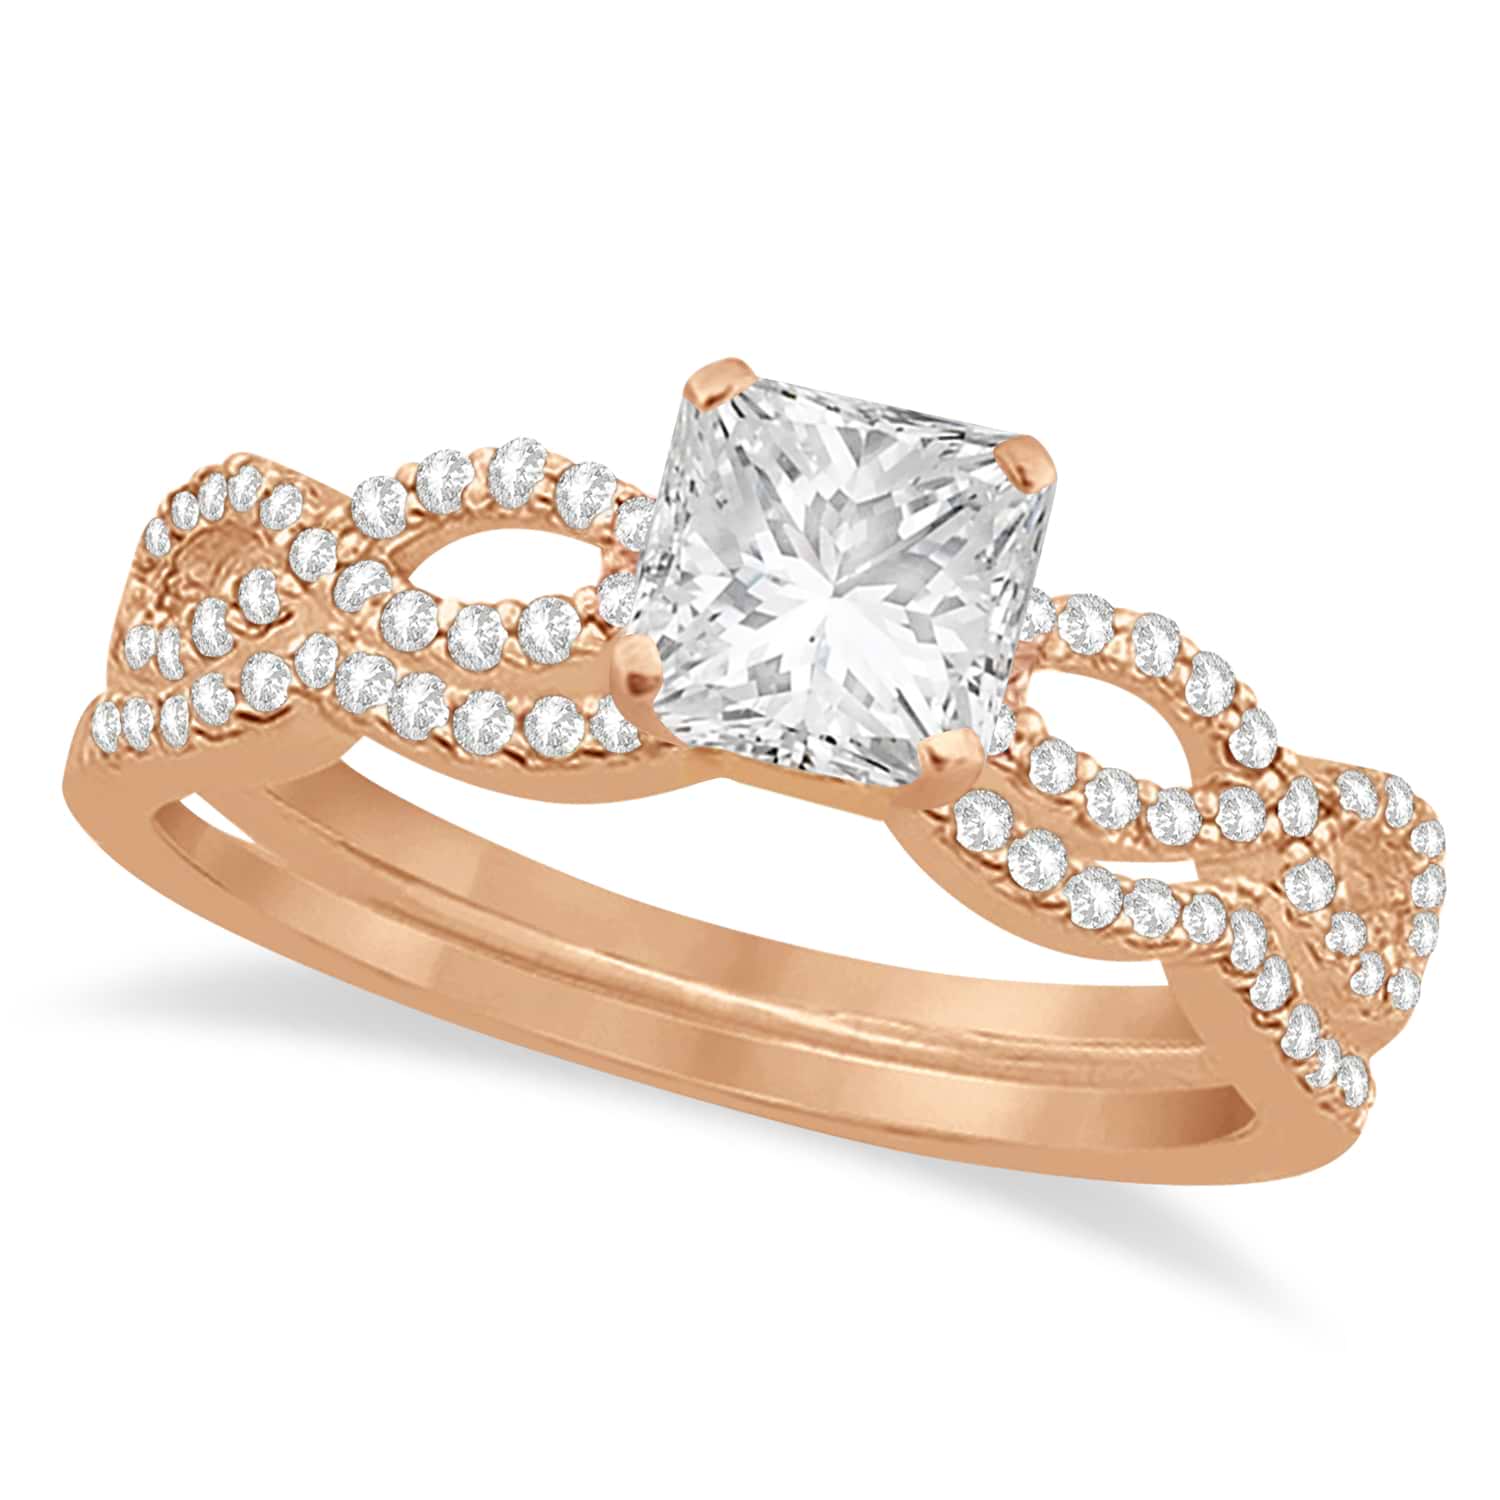 Infinity Princess Cut Lab Grown Diamond Bridal Ring Set 18k Rose Gold (0.63ct)